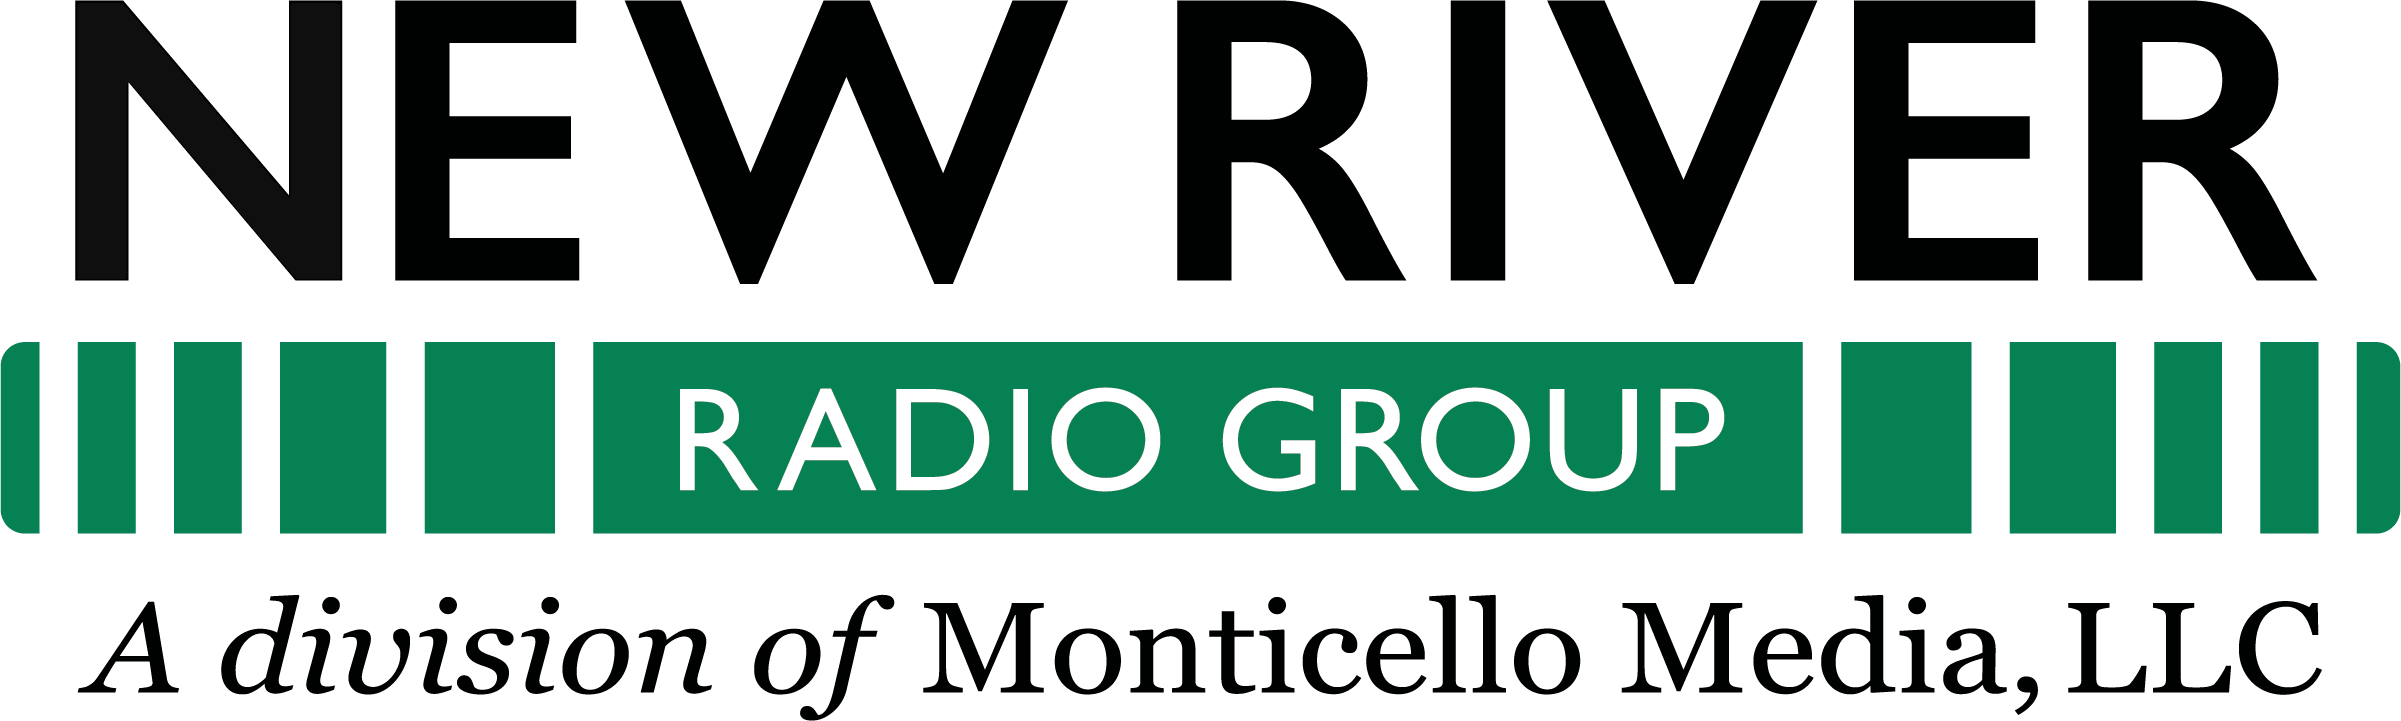 New River Radio Logo Master